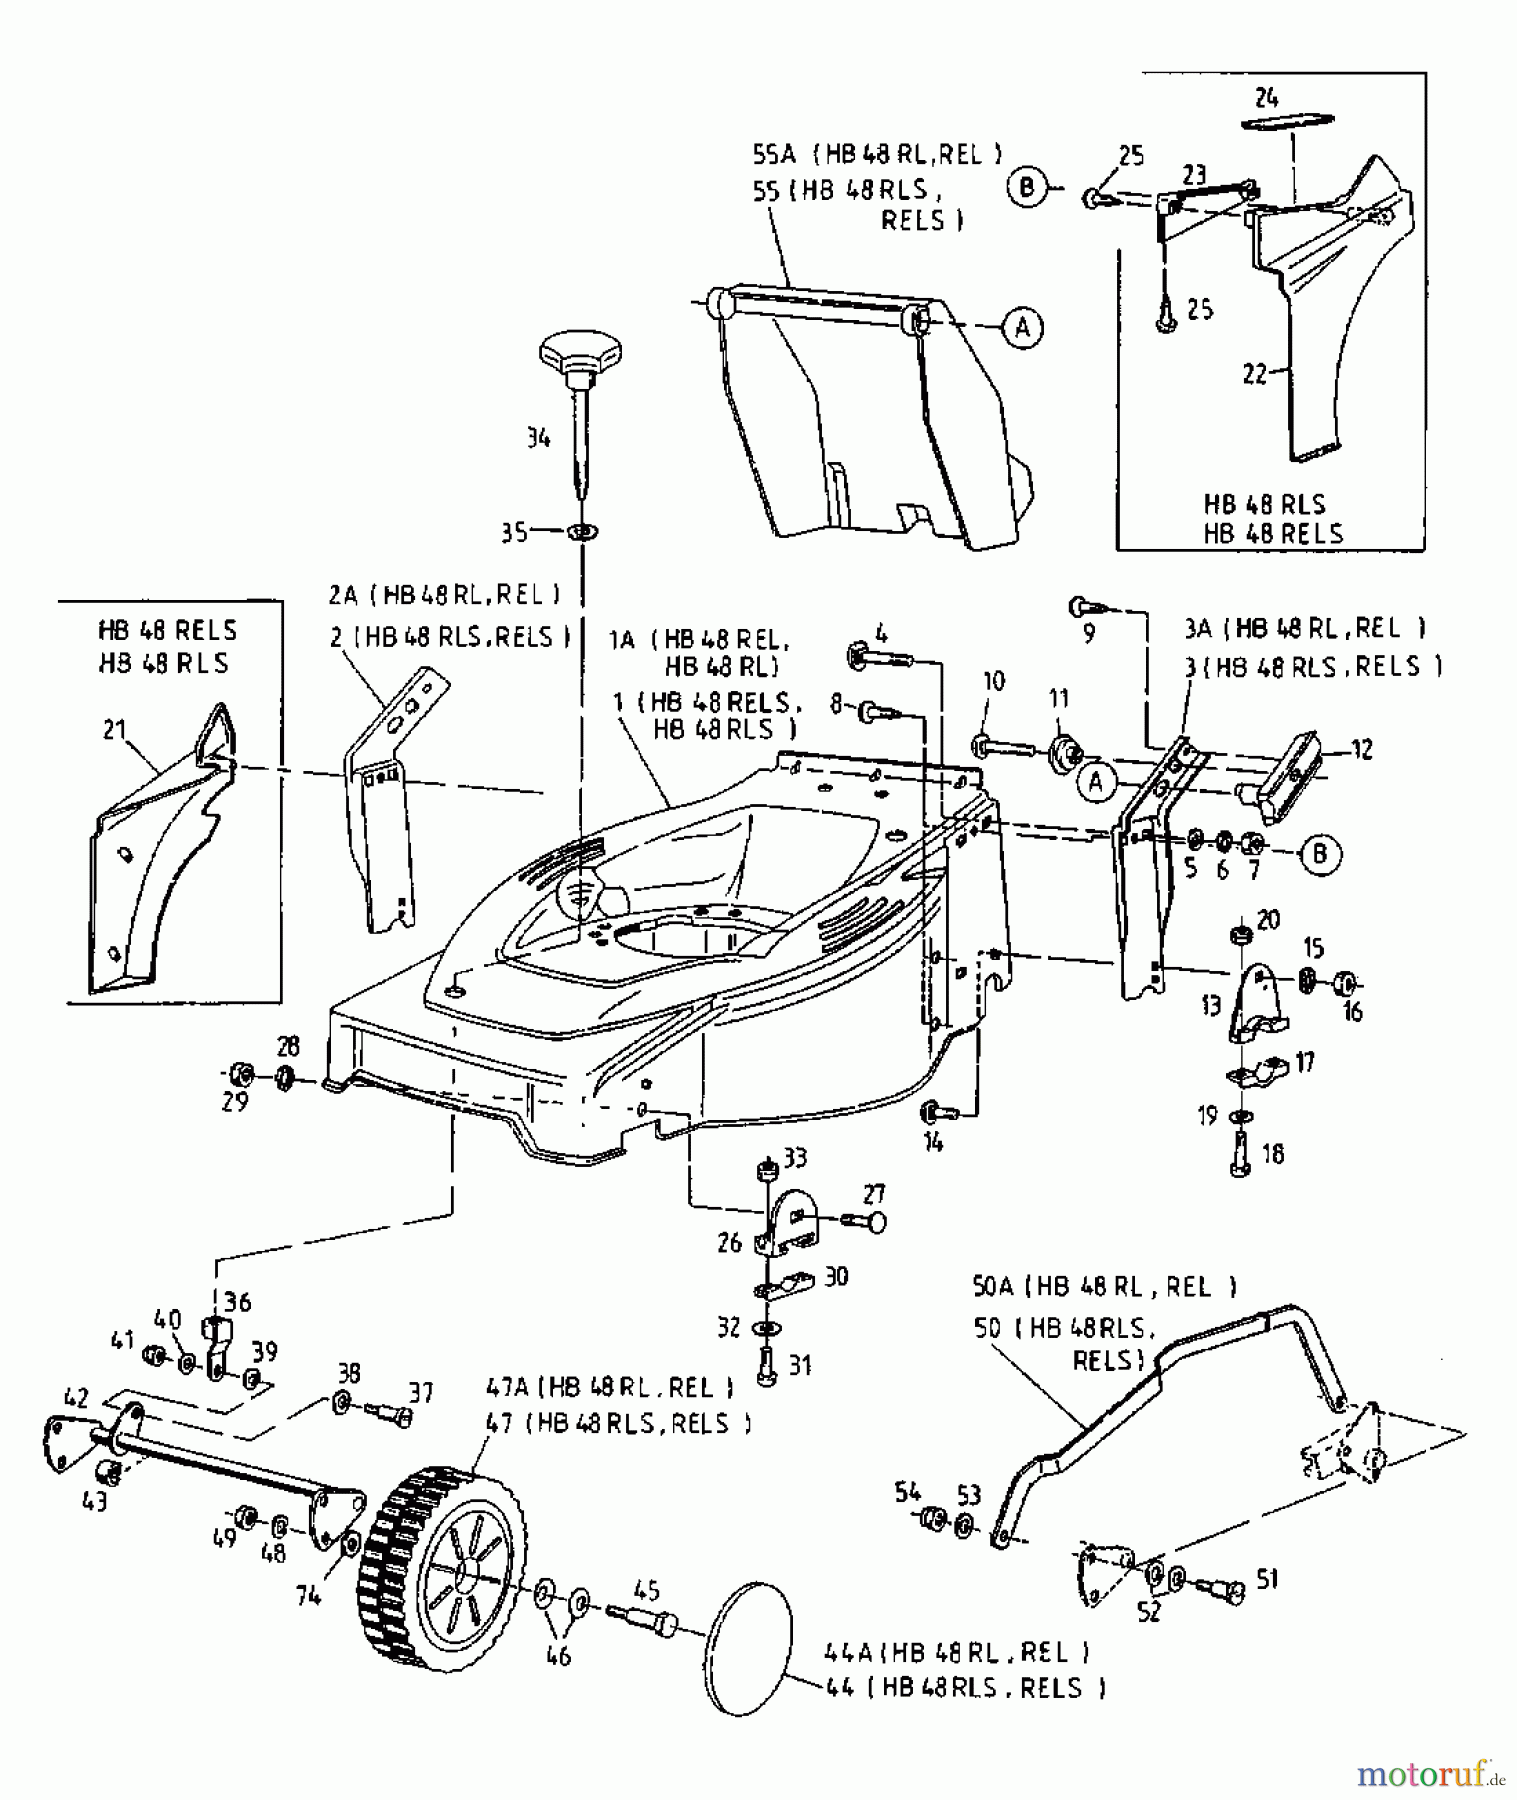  Gutbrod Motormäher mit Antrieb HB 48 REL 12CET58U604  (2000) Grundgerät